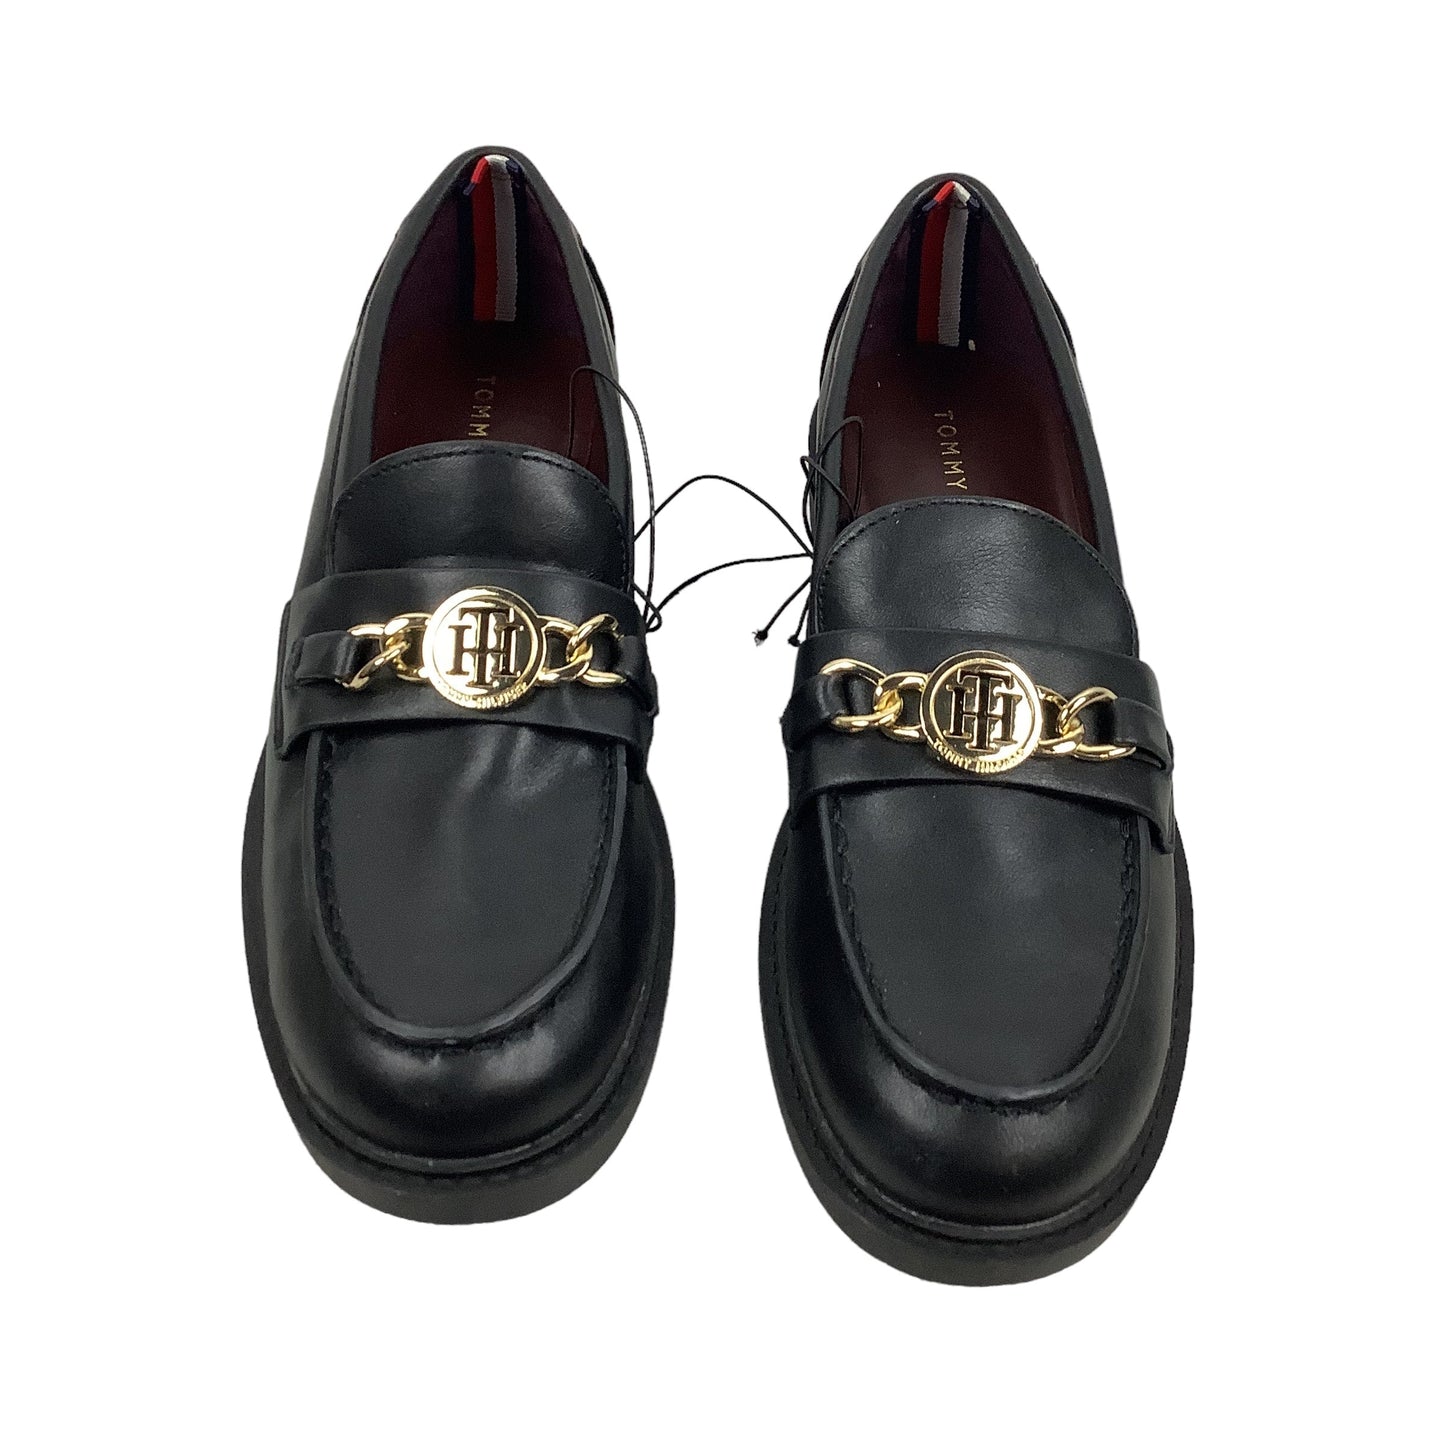 Black Shoes Flats Tommy Hilfiger, Size 6